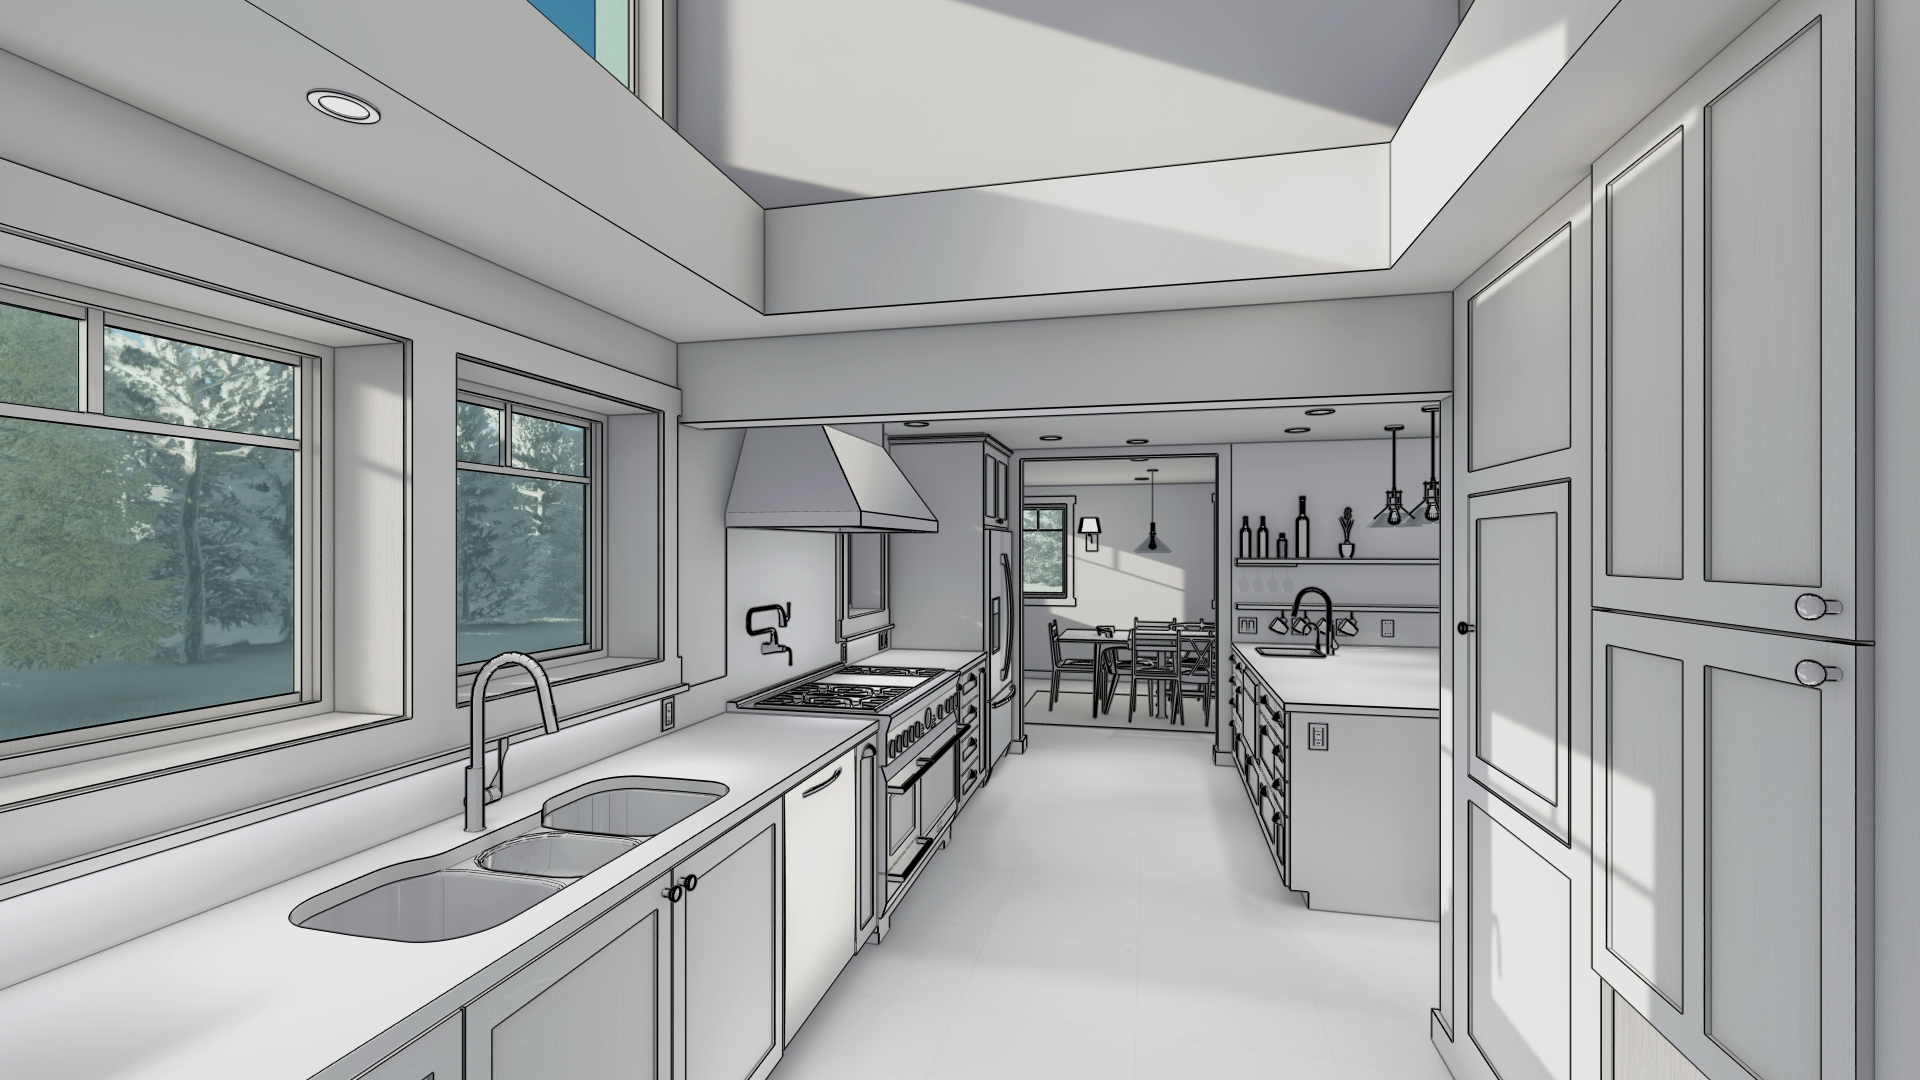 Kitchen Renovation Drawing by Park Meadows, Park City, Utah by Tarsier 3D Studio